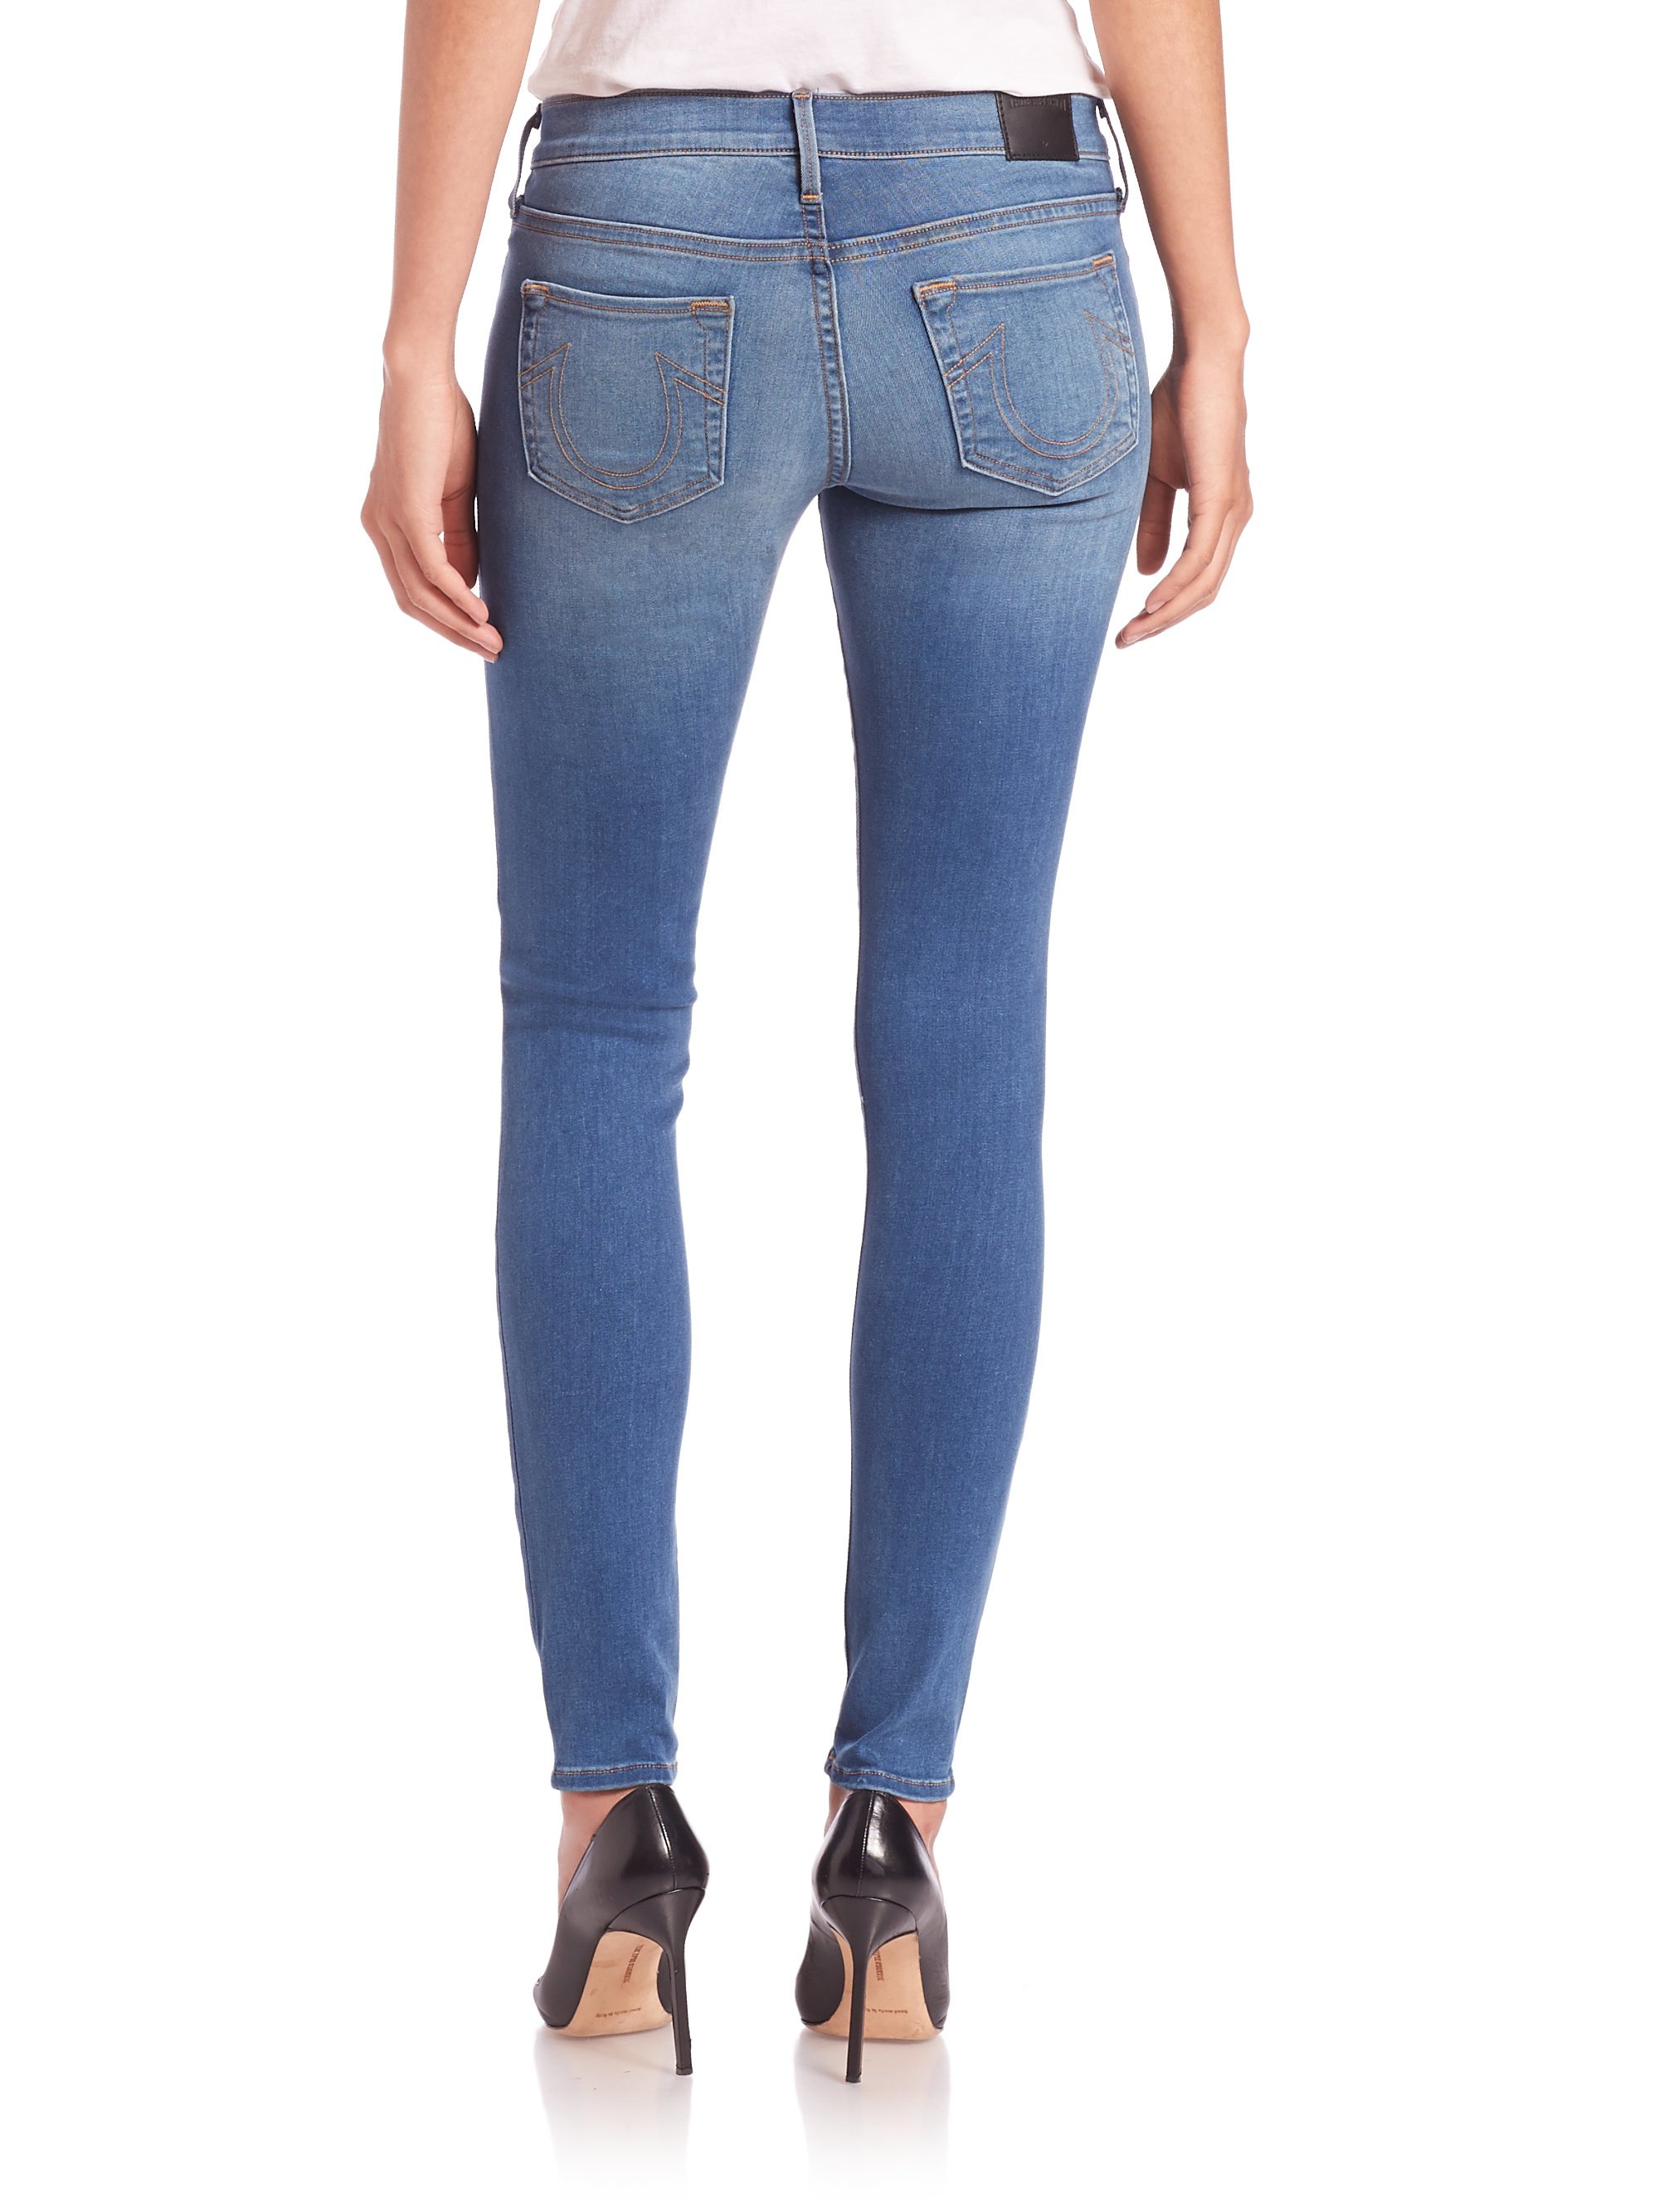 Lyst - True Religion Casey Low-rise Super Skinny Jeans in Blue